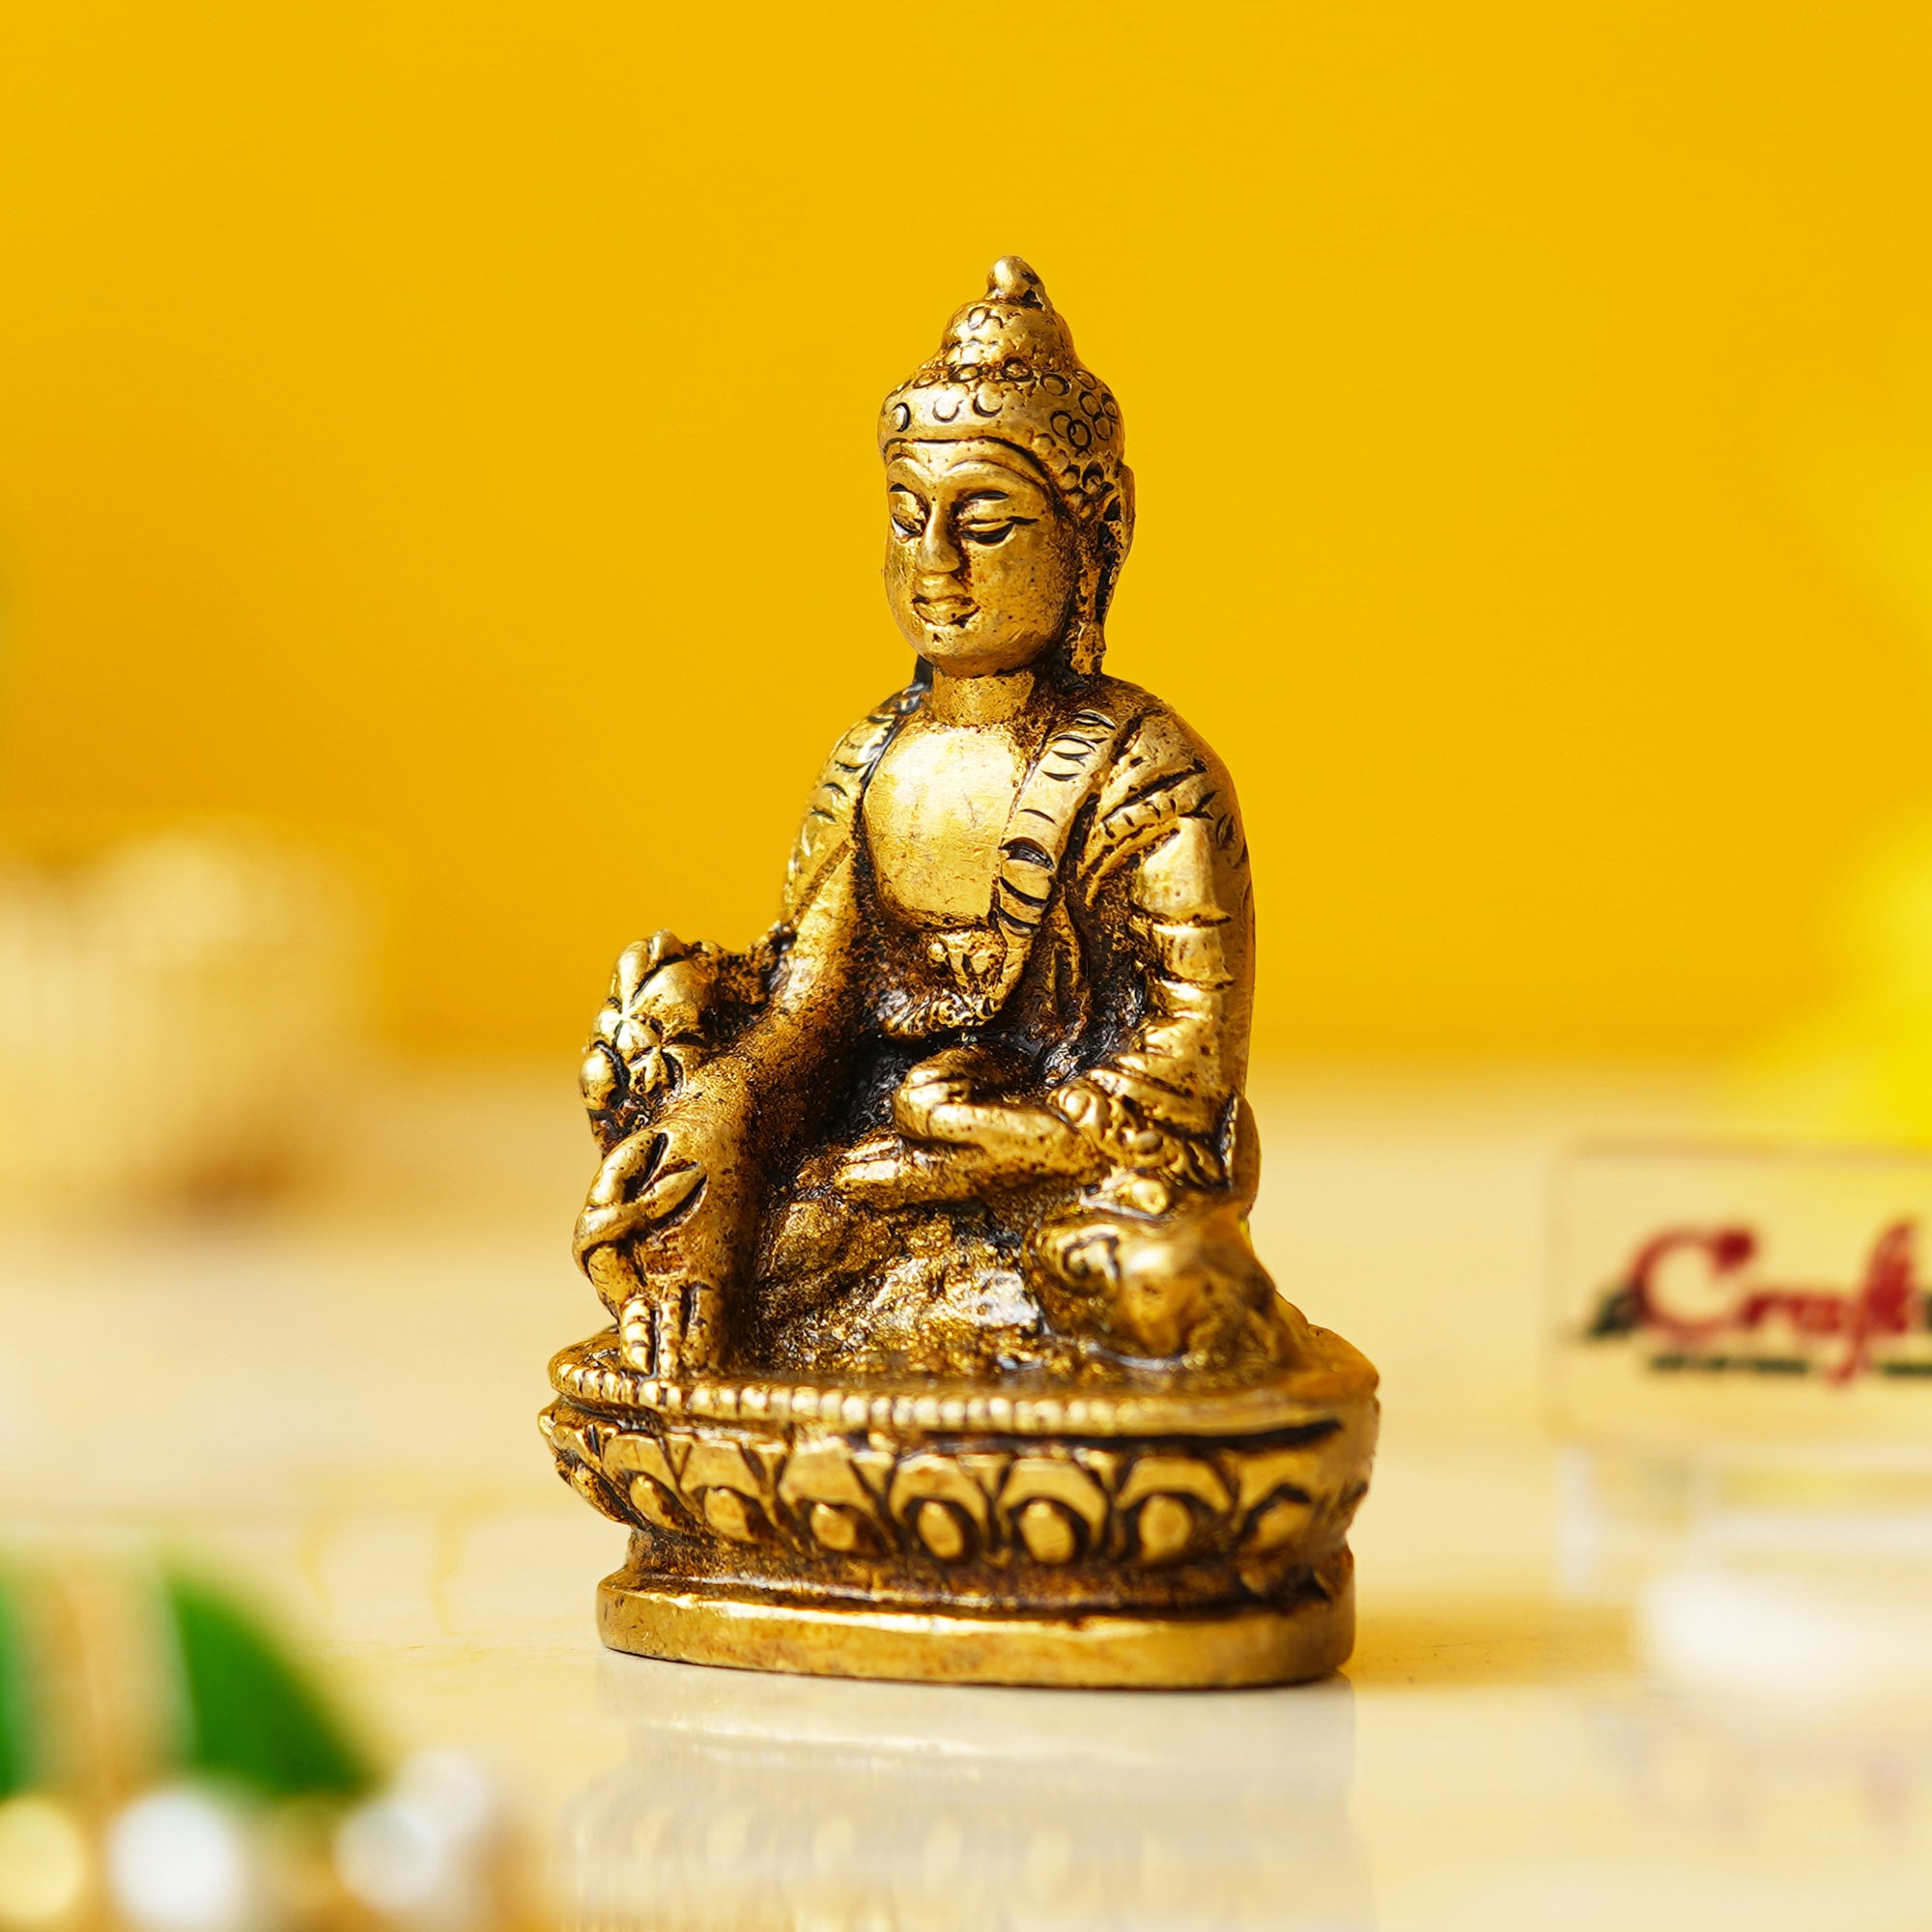 Golden Brass Lord Buddha Statue Murti Idol for Home Decor, Living Room, Office Desk, Car Dashboard - Buddha Purnima Gift to Bring Good Luck 1